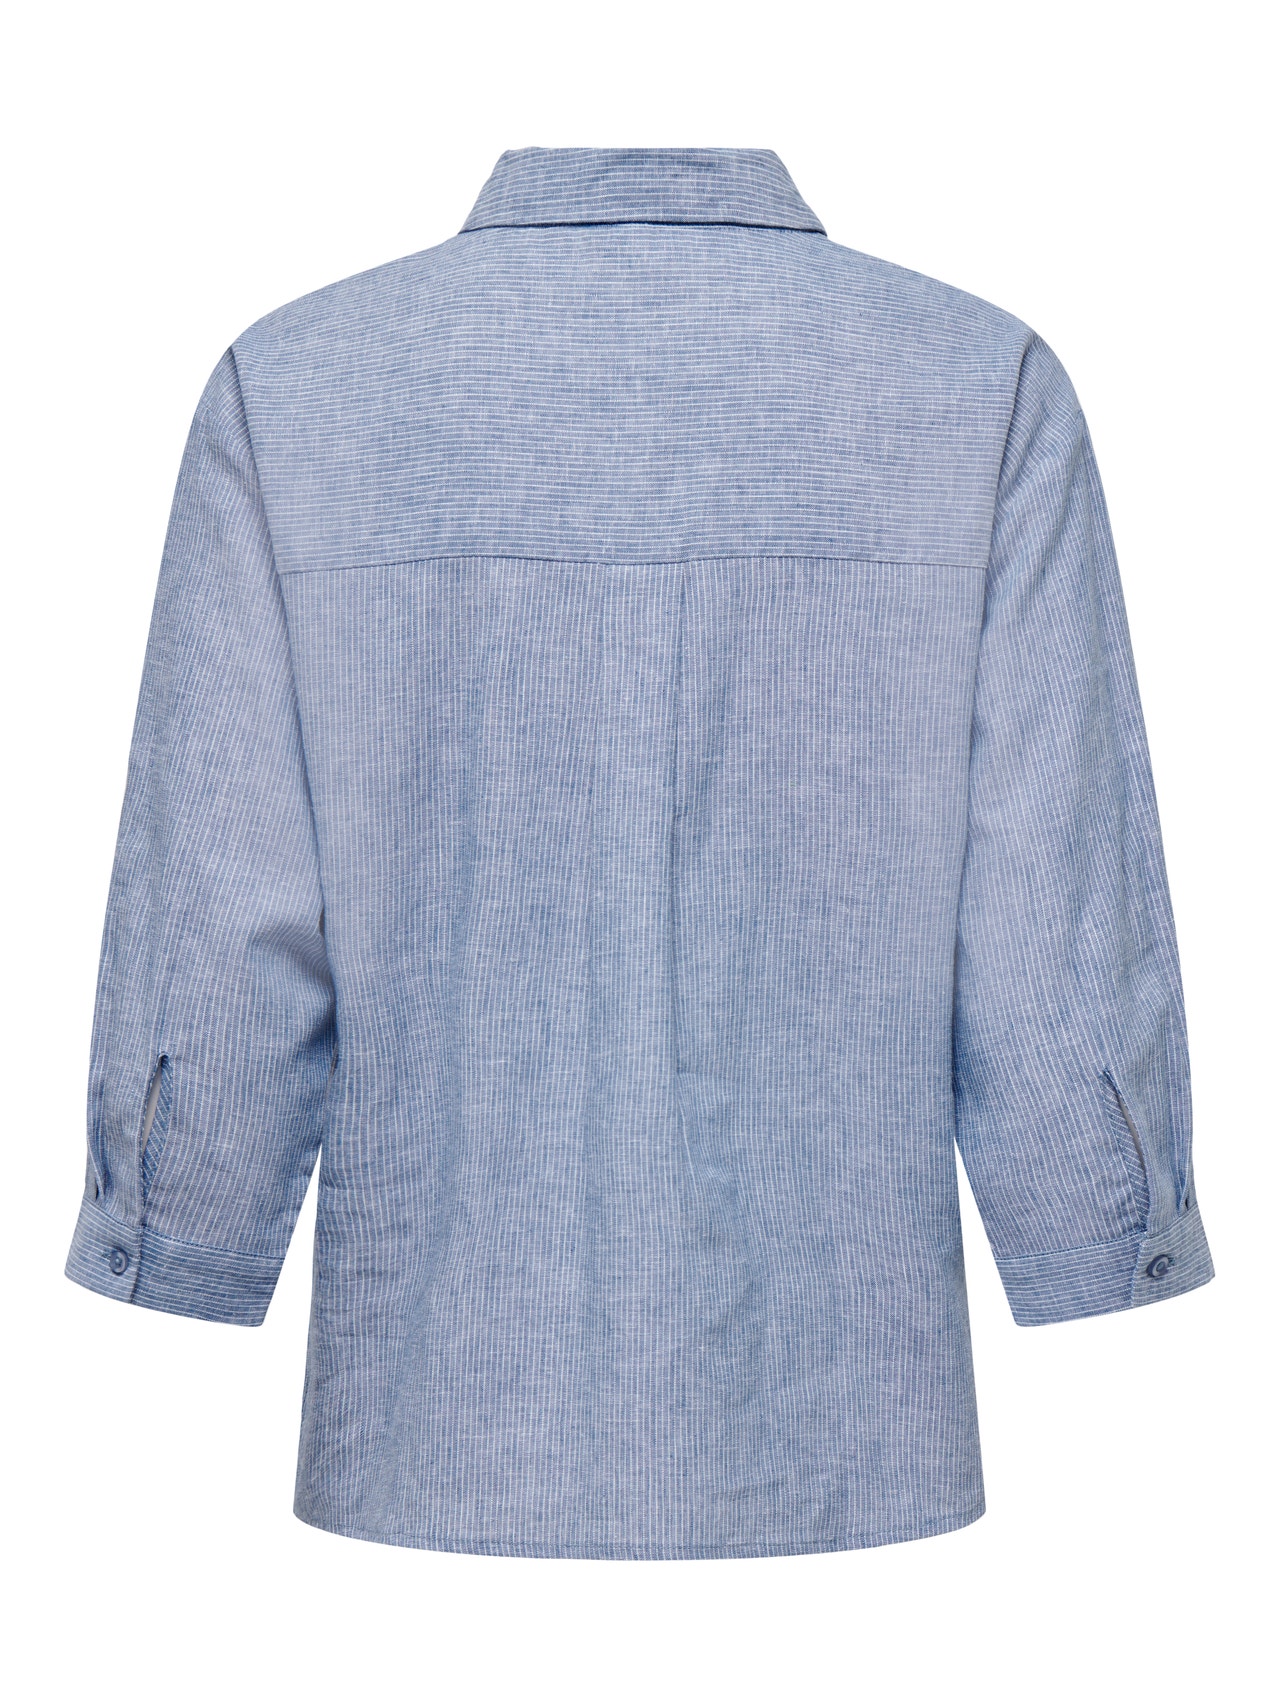 ONLY Chemises Regular Fit Col chemise Poignets repliés -Dresden Blue - 15292424